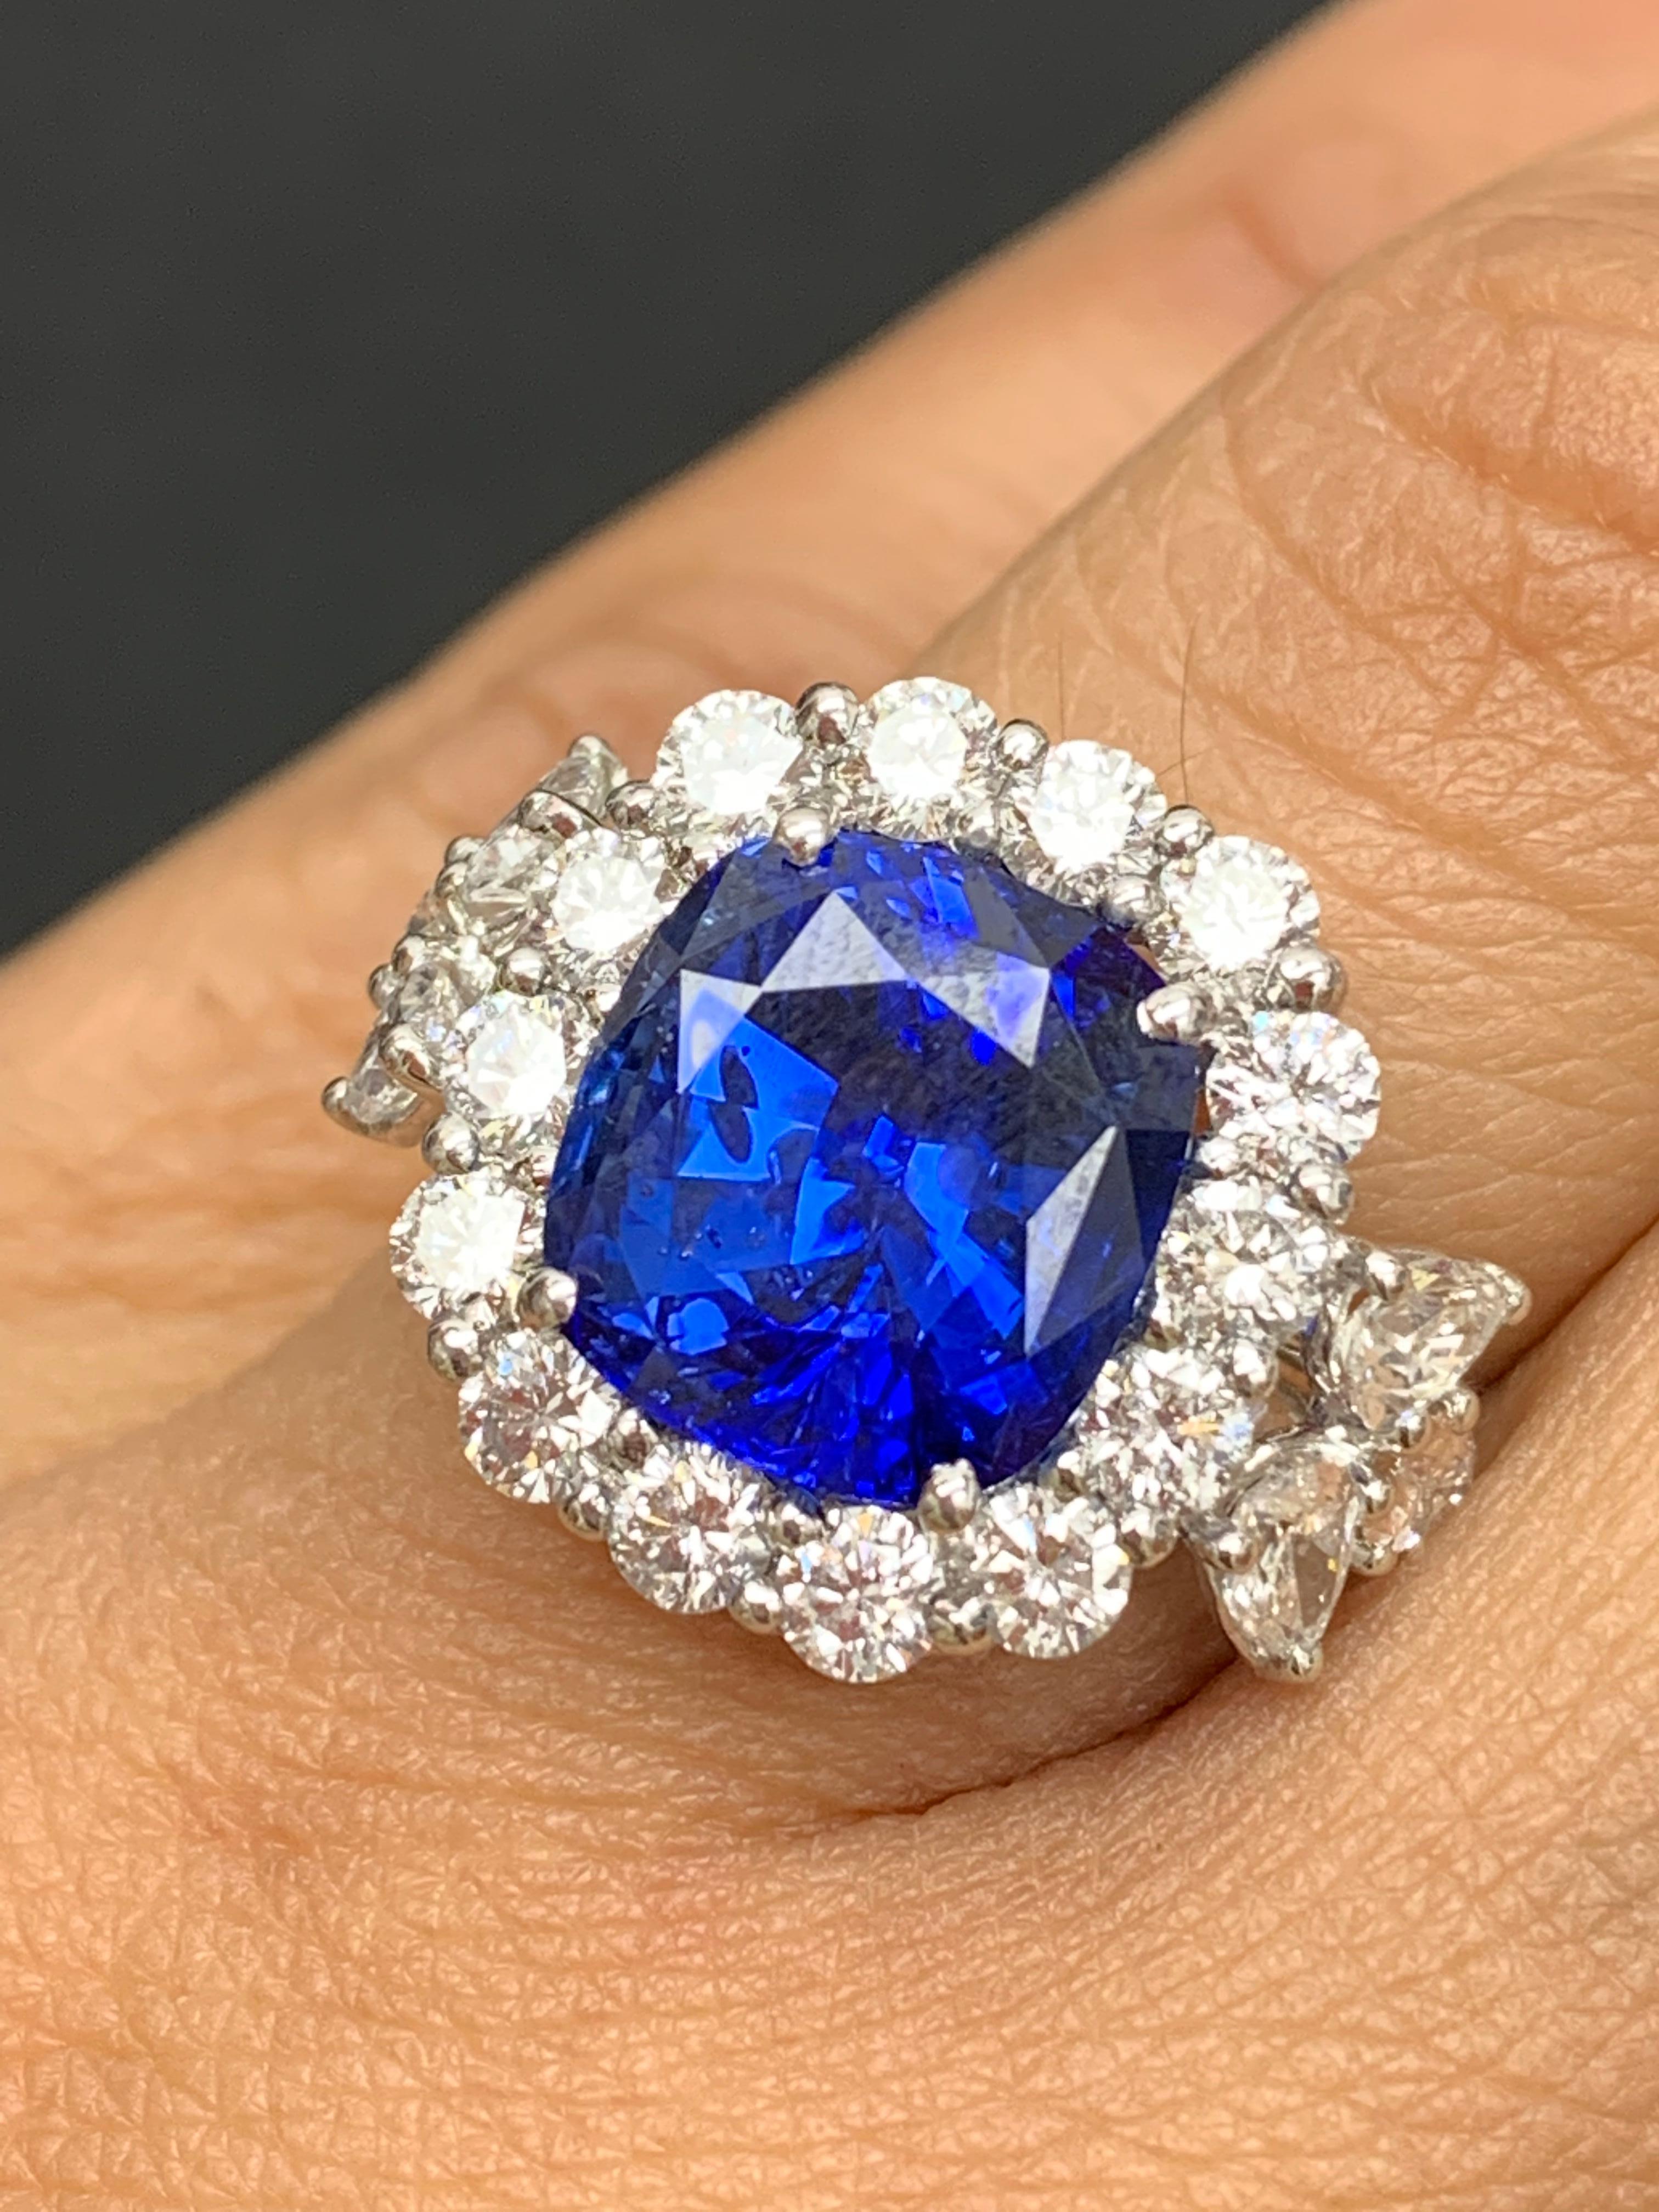 Modern 6.61 Carat Cushion Cut Blue Sapphire Diamond Engagement Ring in Platinum For Sale